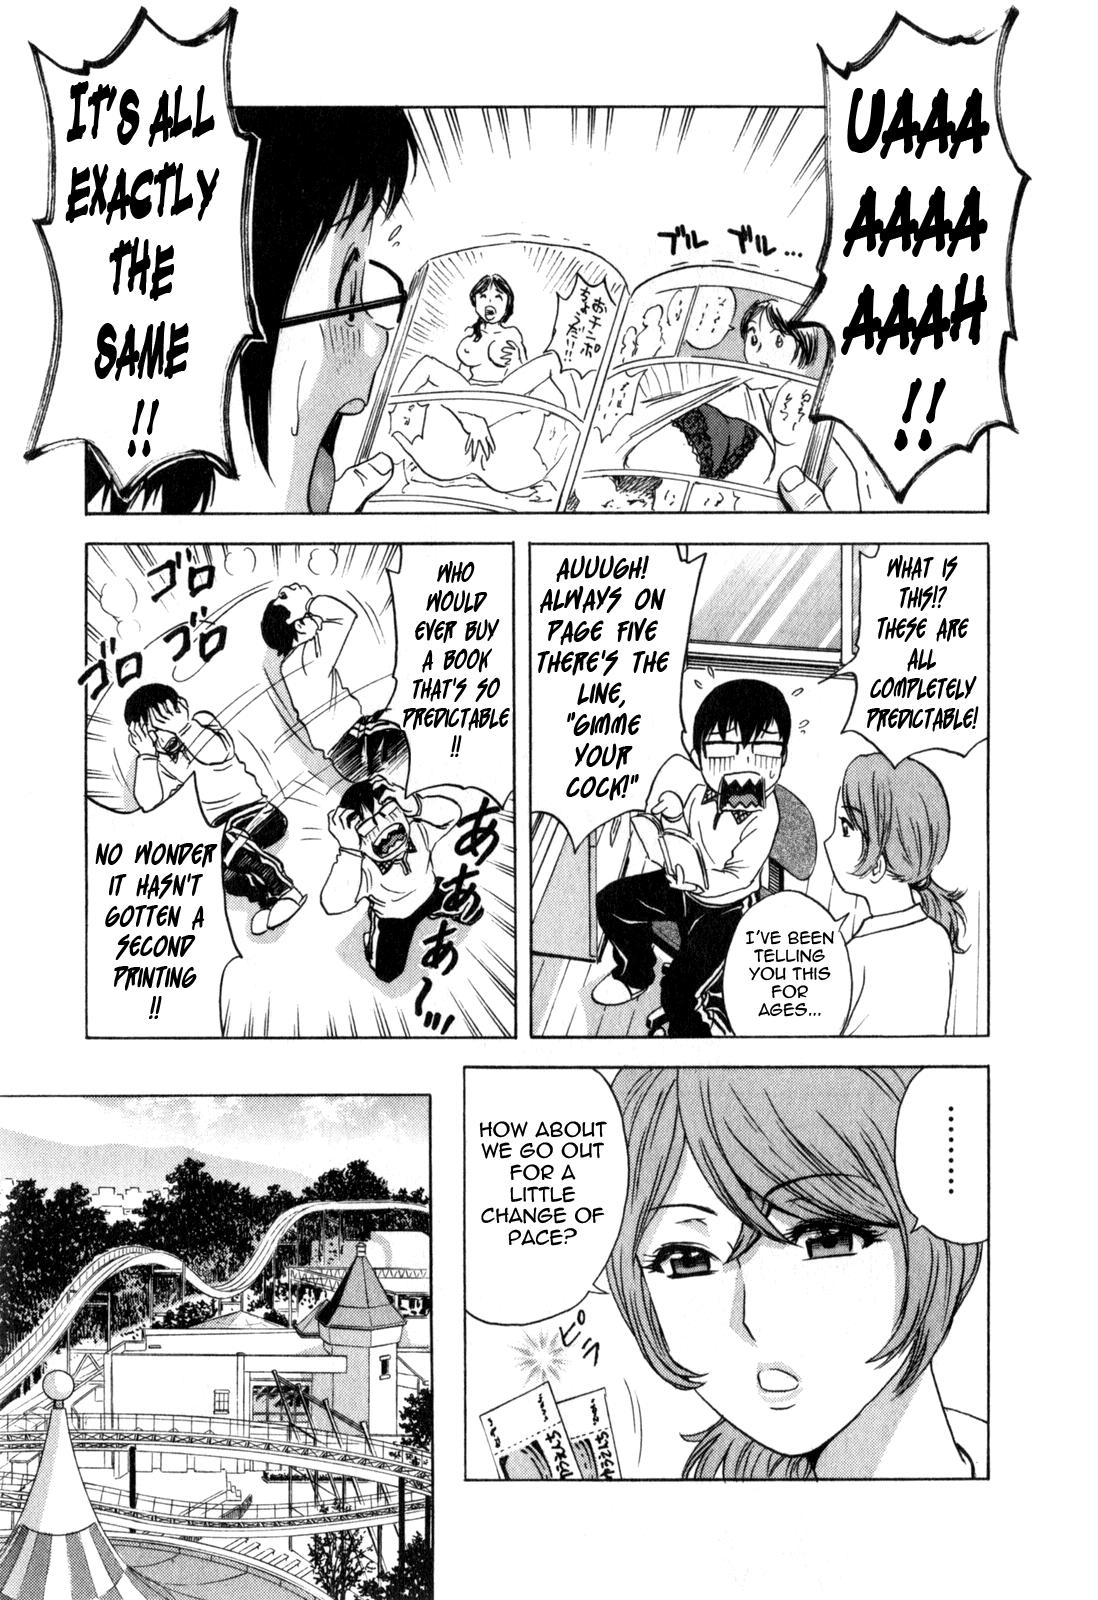 [Hidemaru] Life with Married Women Just Like a Manga 3 - Ch. 1-2 [English] {Tadanohito} 29